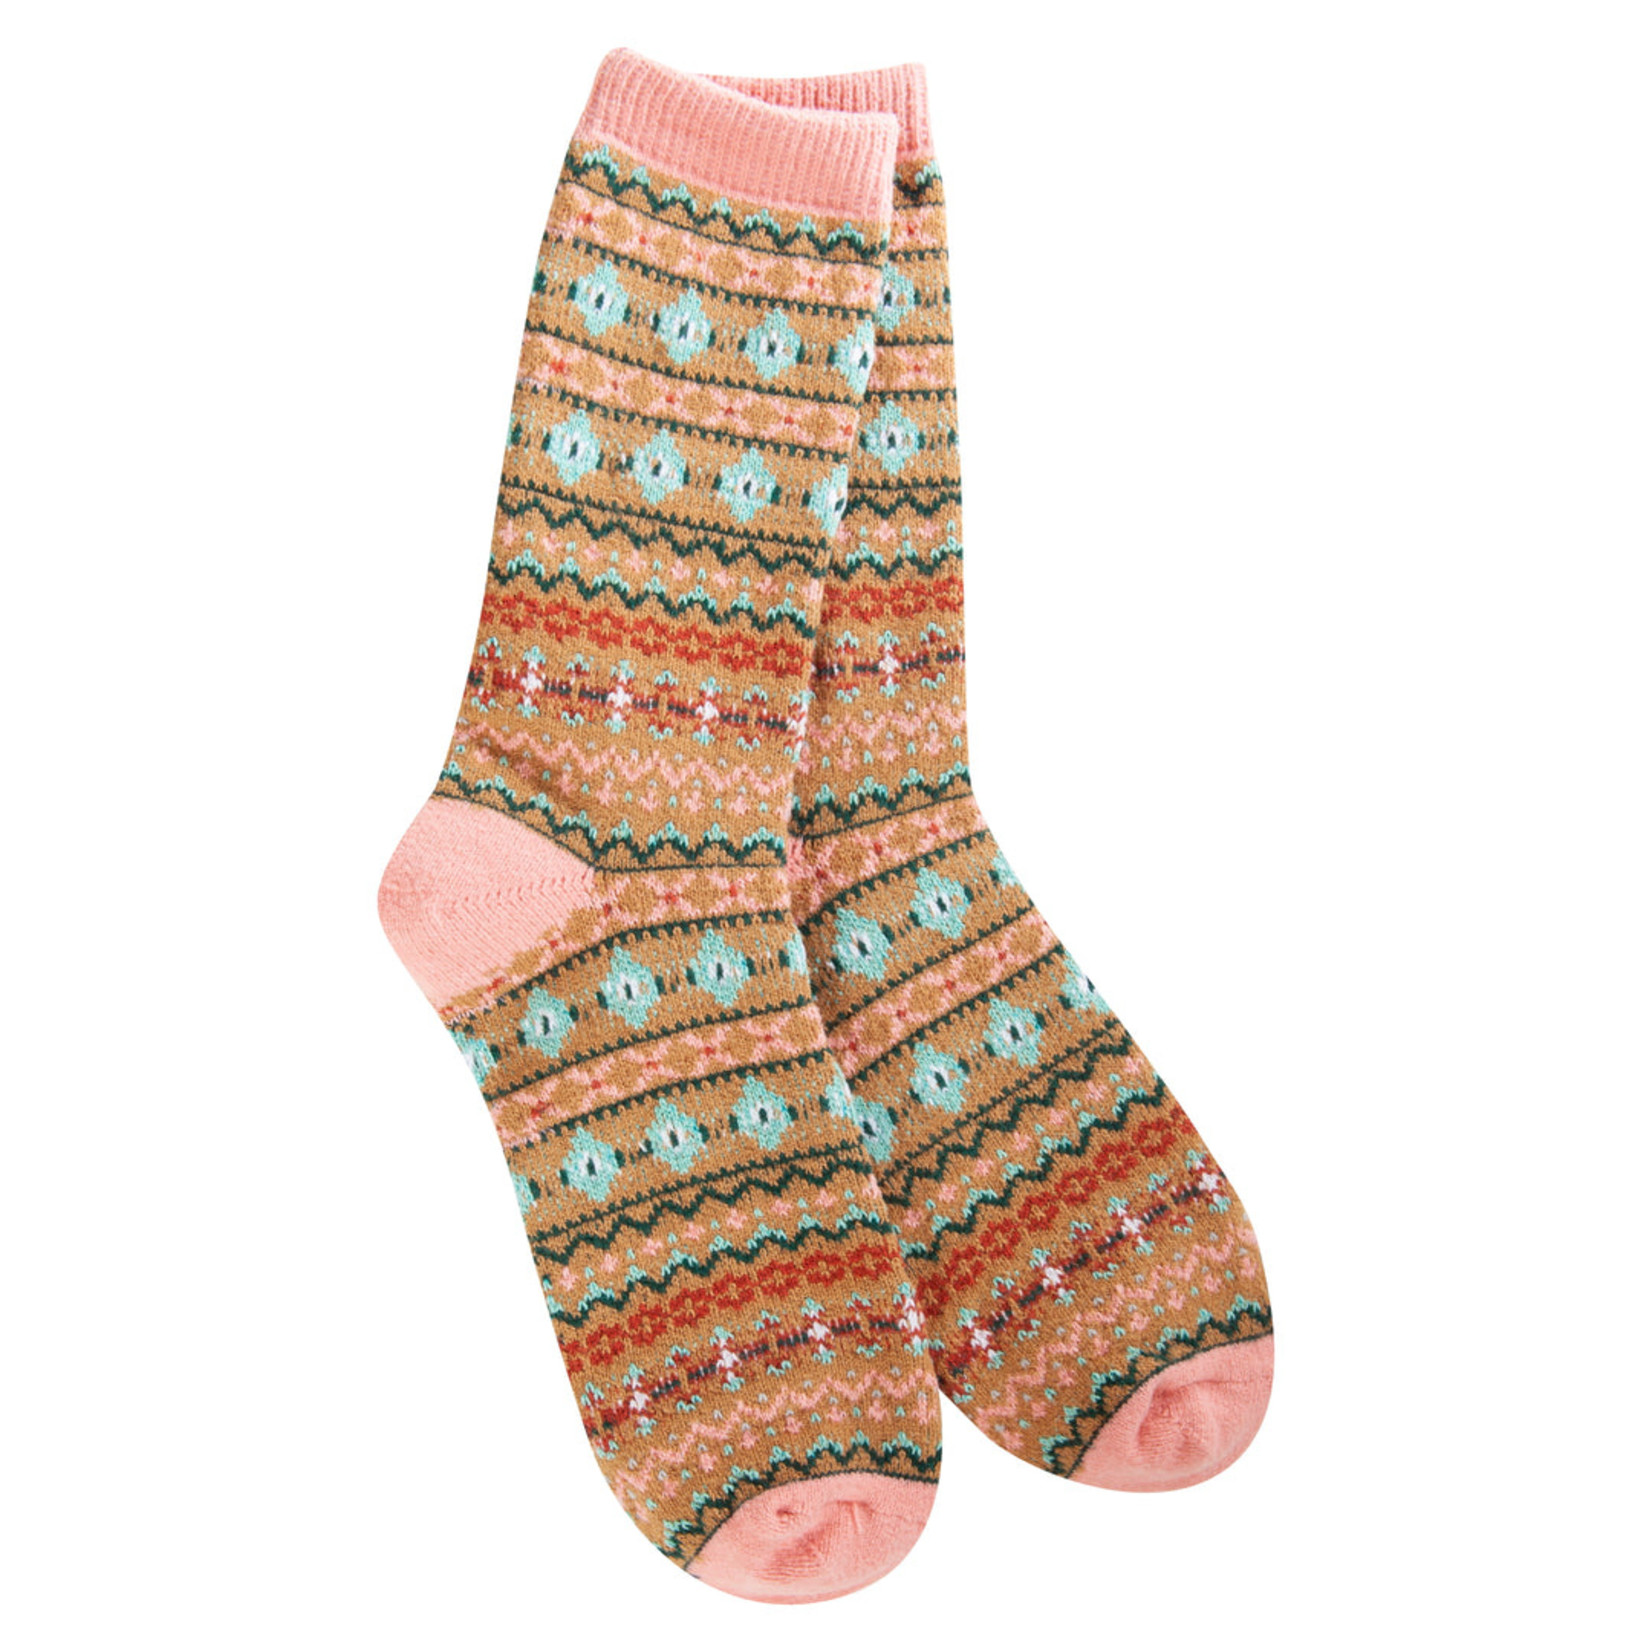 Worlds Softest Socks Worlds Softest Socks - Holiday Mini Crew - Holiday Wrapping